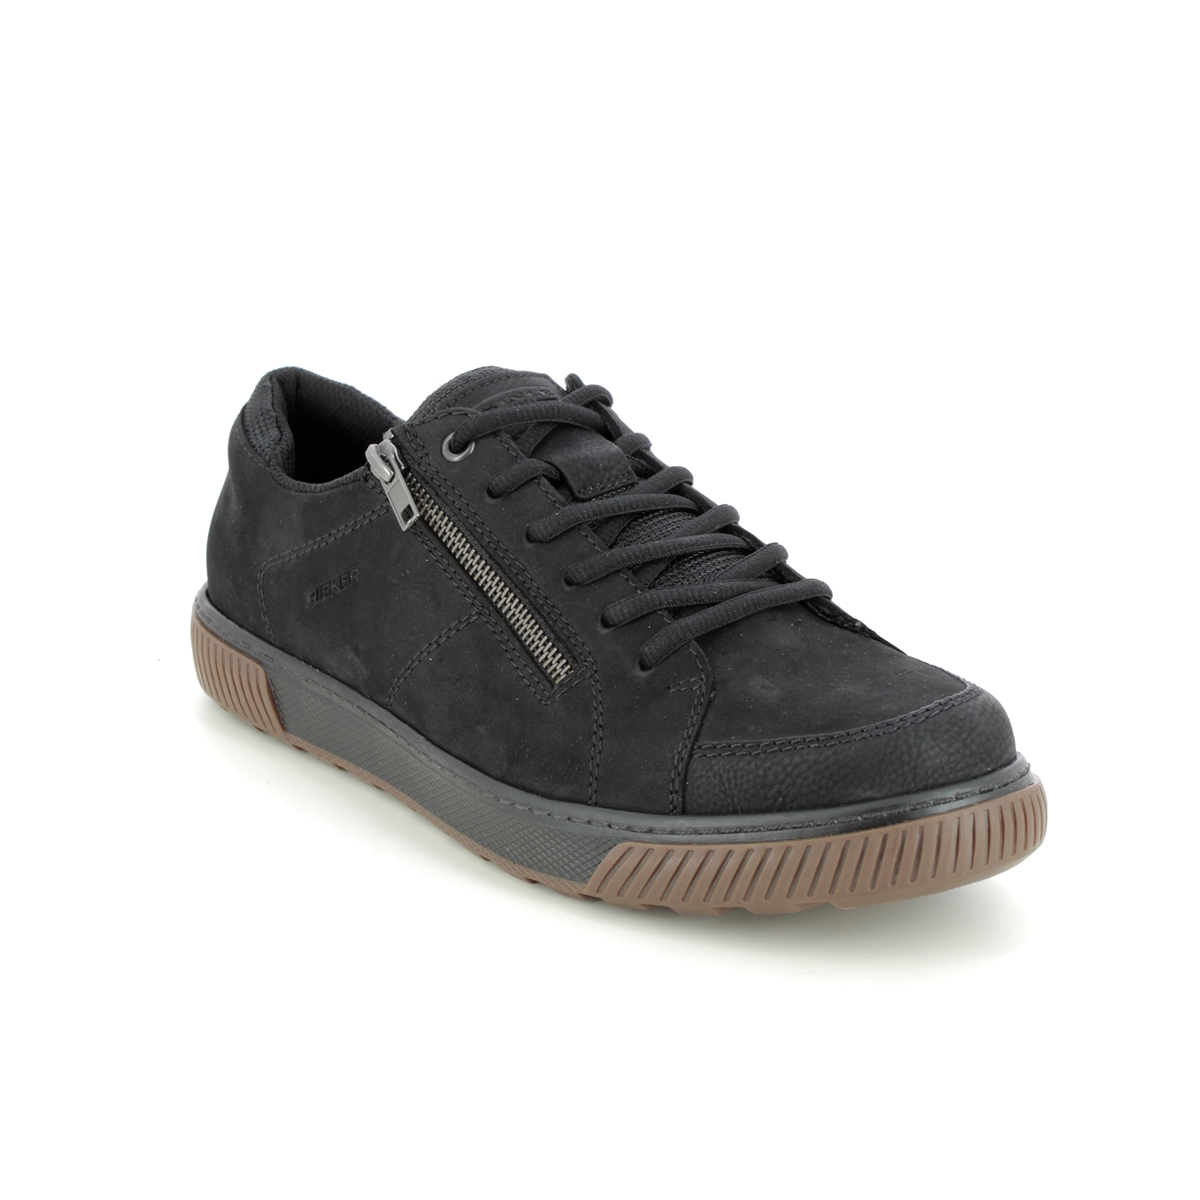 Rieker Urbanzi Black Suede Mens Comfort Shoes 18910-00 In Size 43 In Plain Black Suede